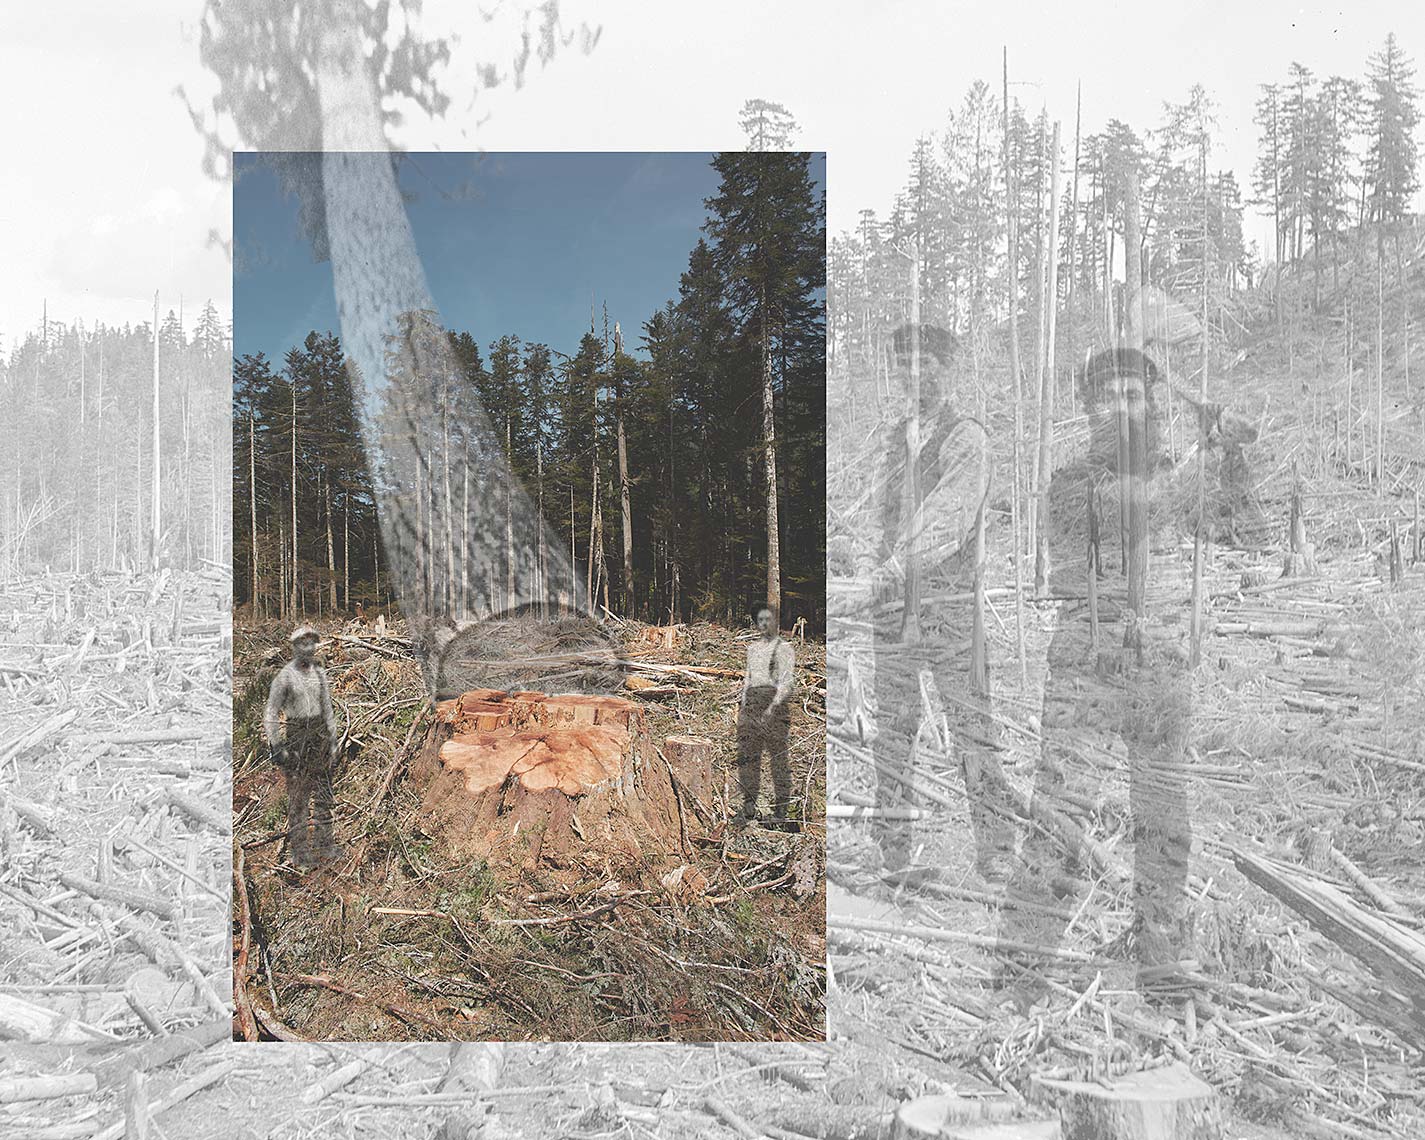  Falling Boundaries - Timberfall - Environmental  Art Photography